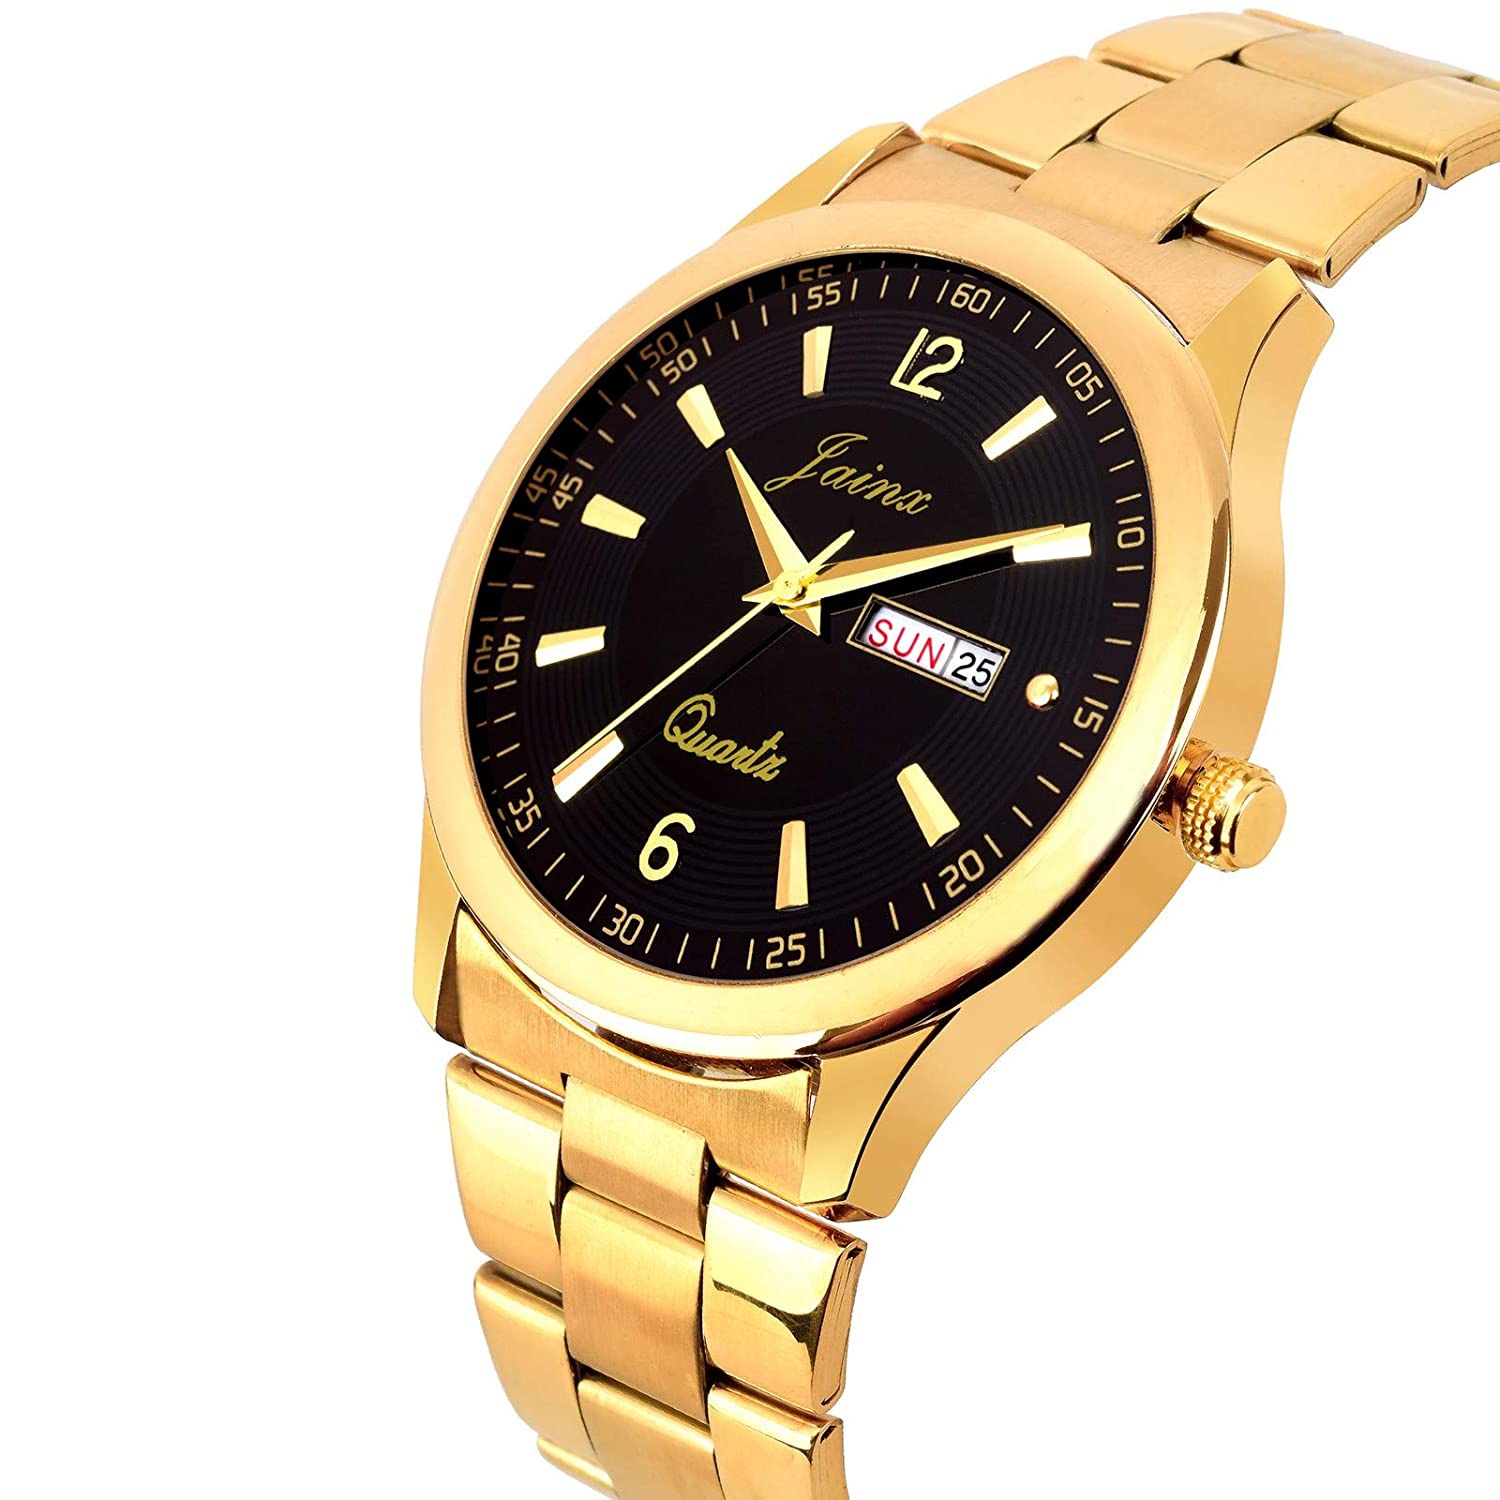 Premium Day & Date Feature Black Dial Golden Chain Analog Watch - For Men JM1132 - Jainx Store